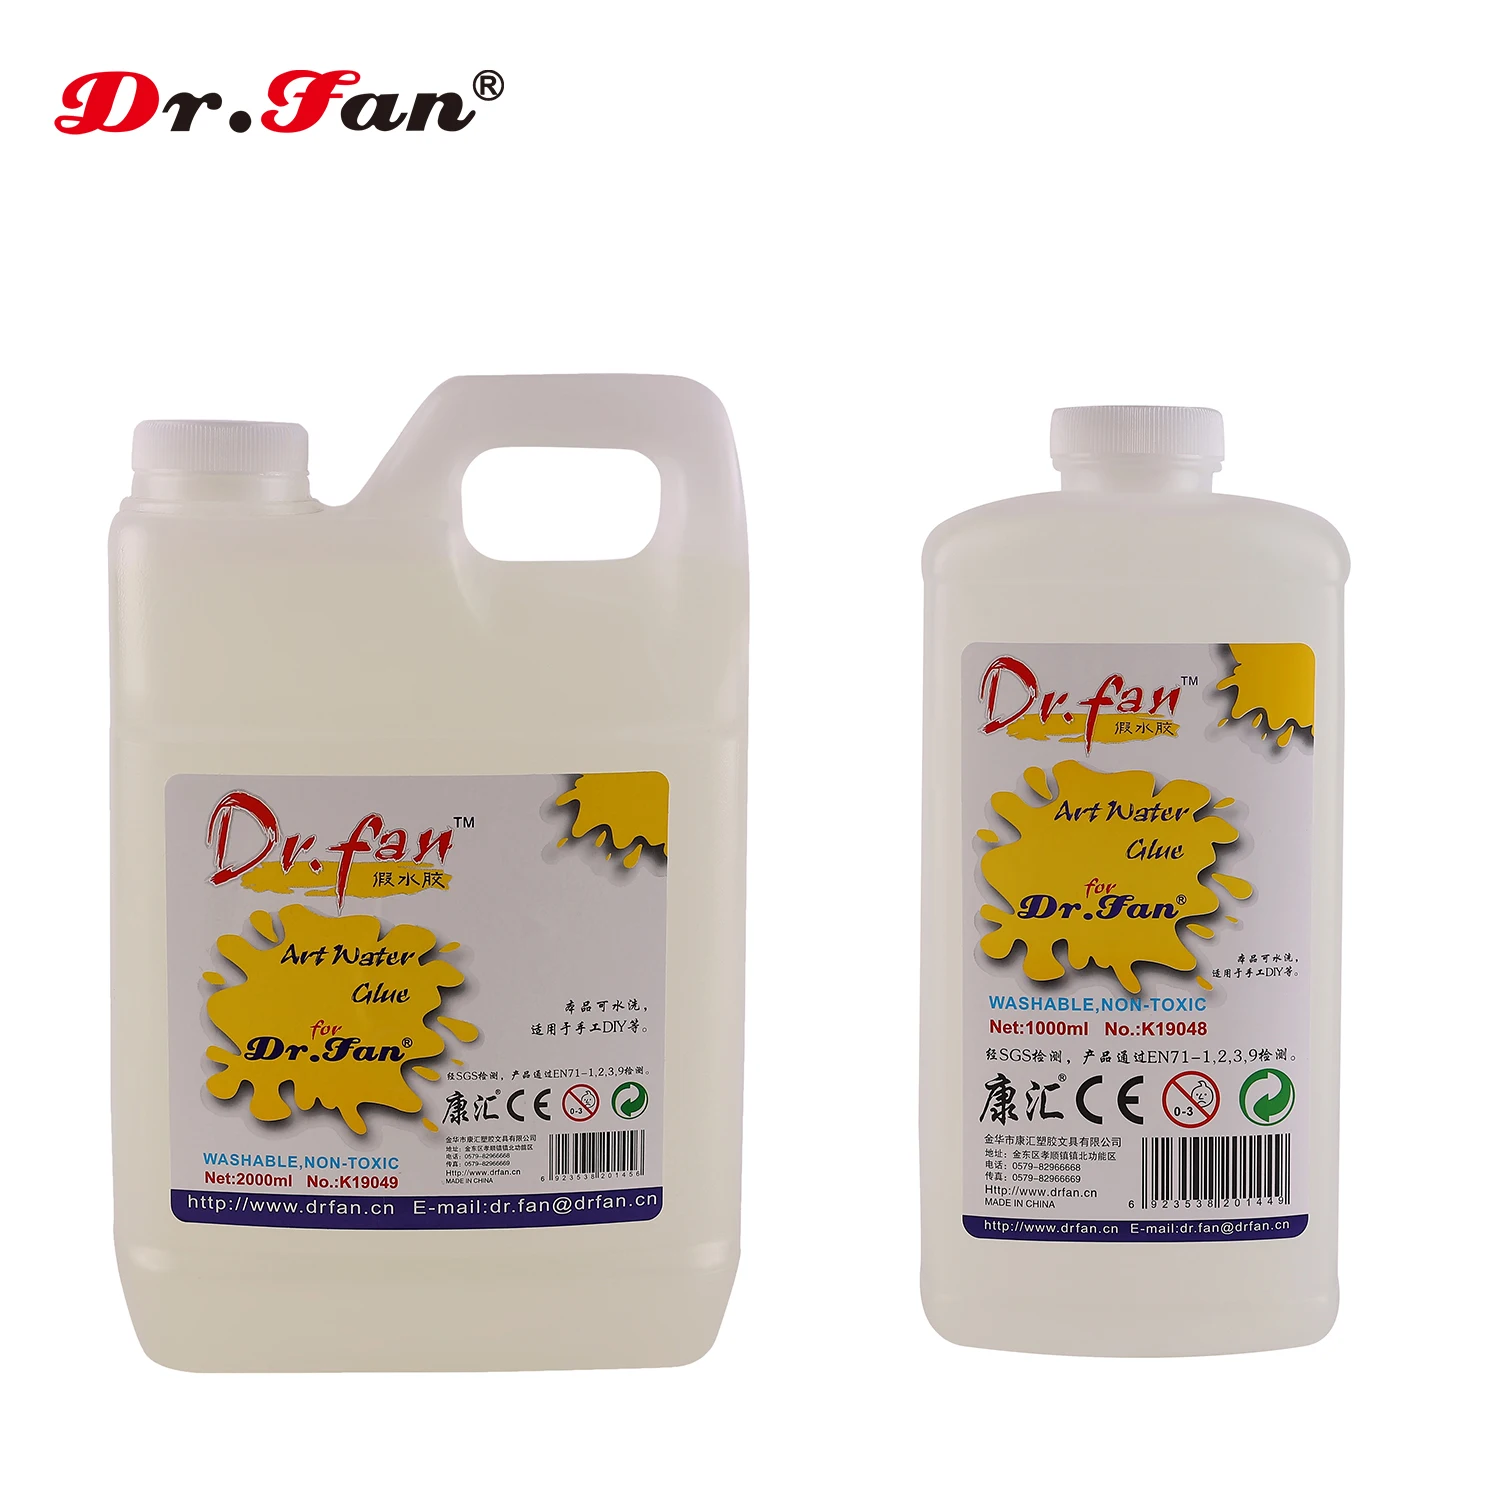 
China Factory supplier drfan 1000ml art water glue for slime glue set 